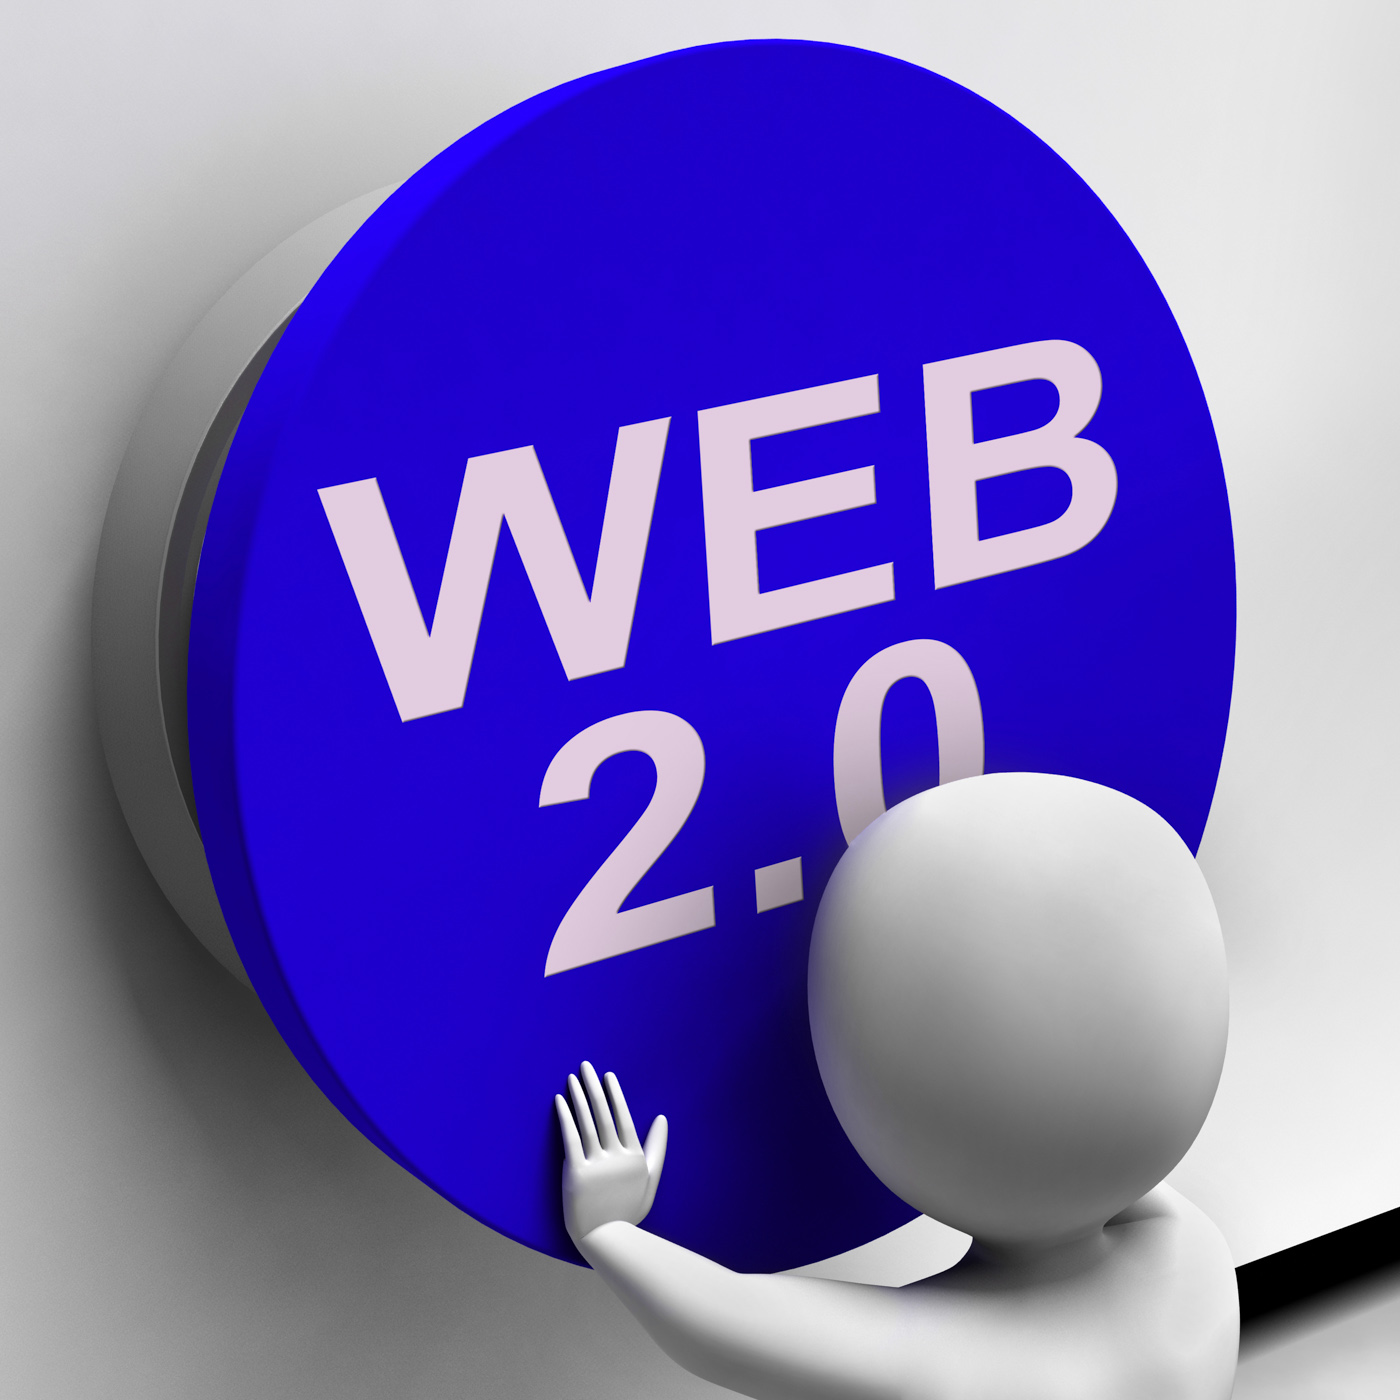 Web 20 button shows user-generated website platform photo